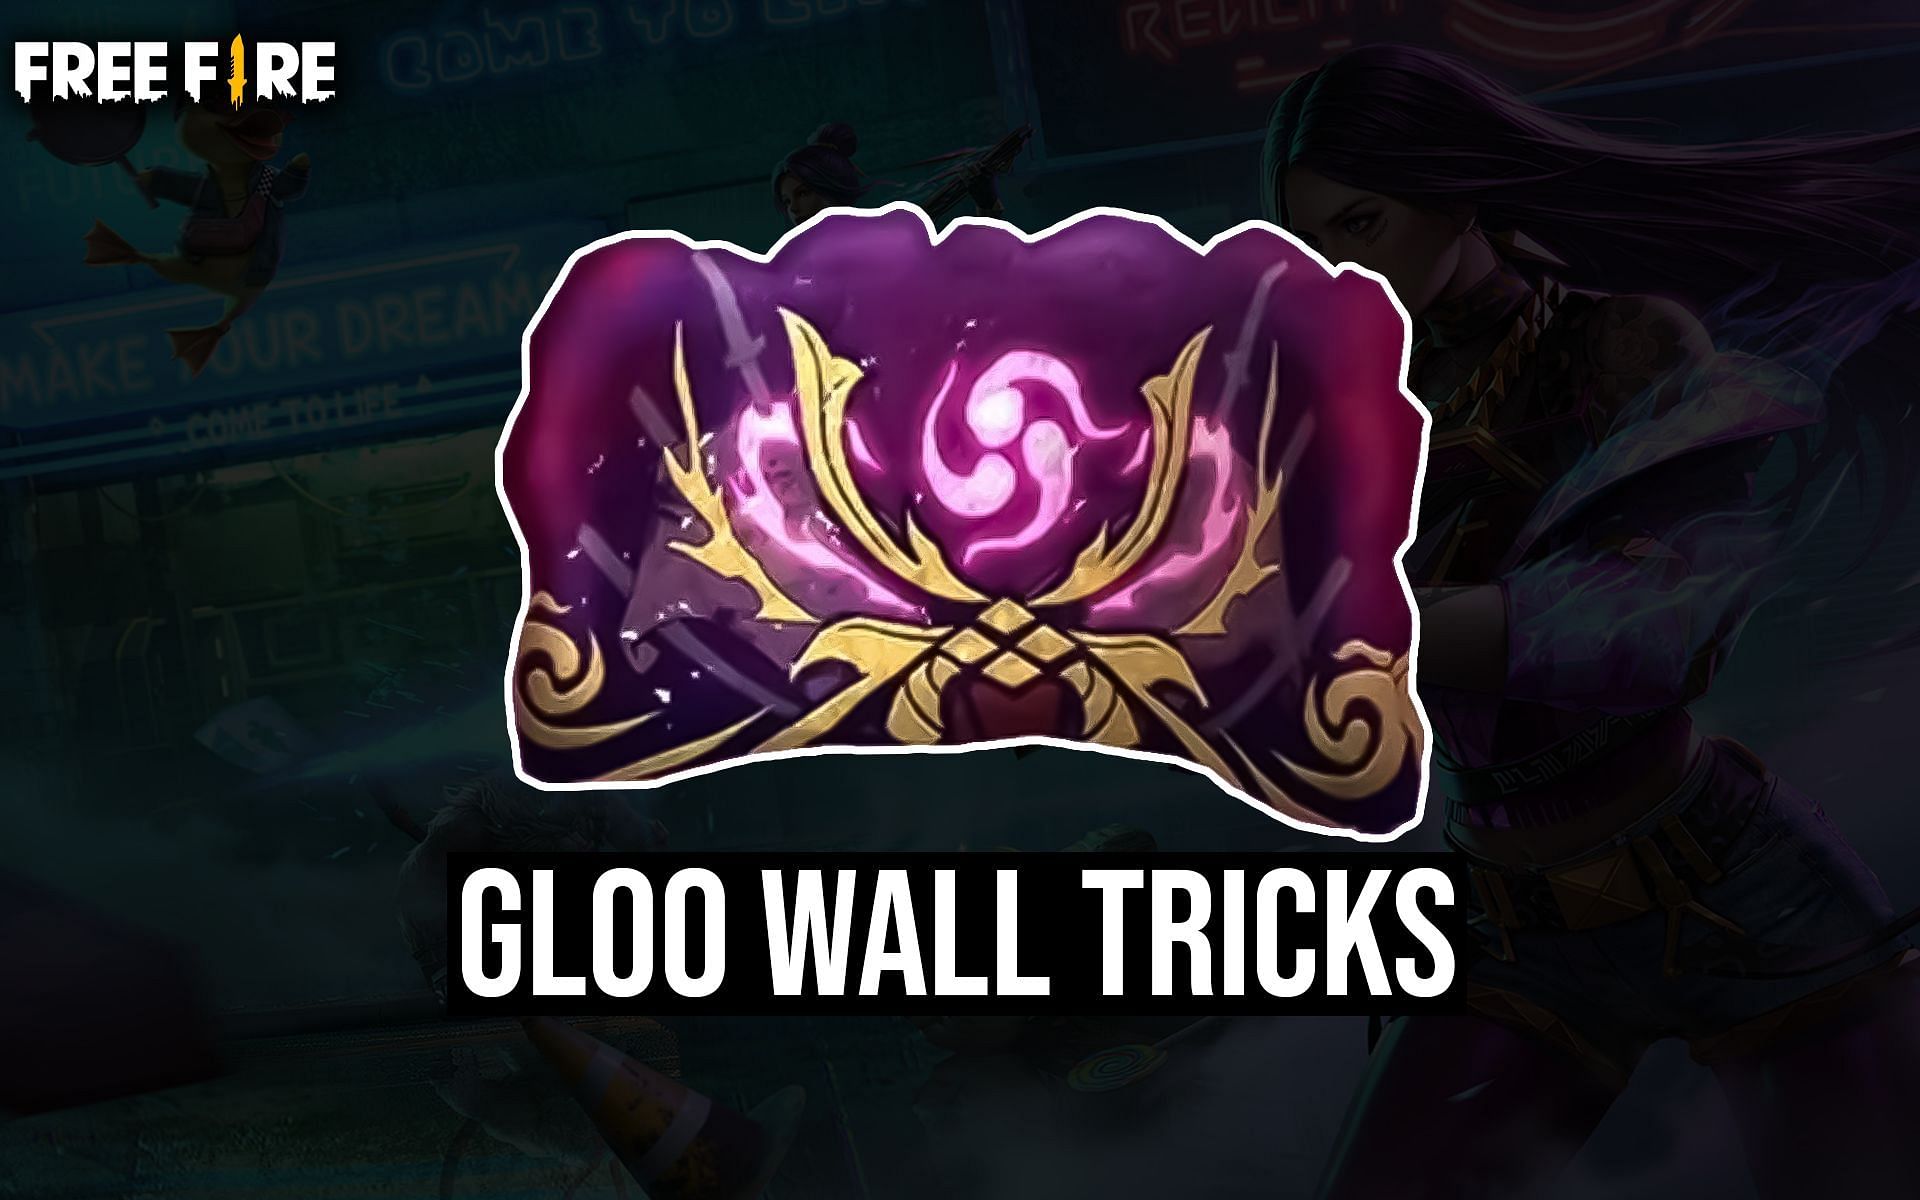 Gloo wall tricks help players escape/gain kills in Free Fire (Image via Sportskeeda)